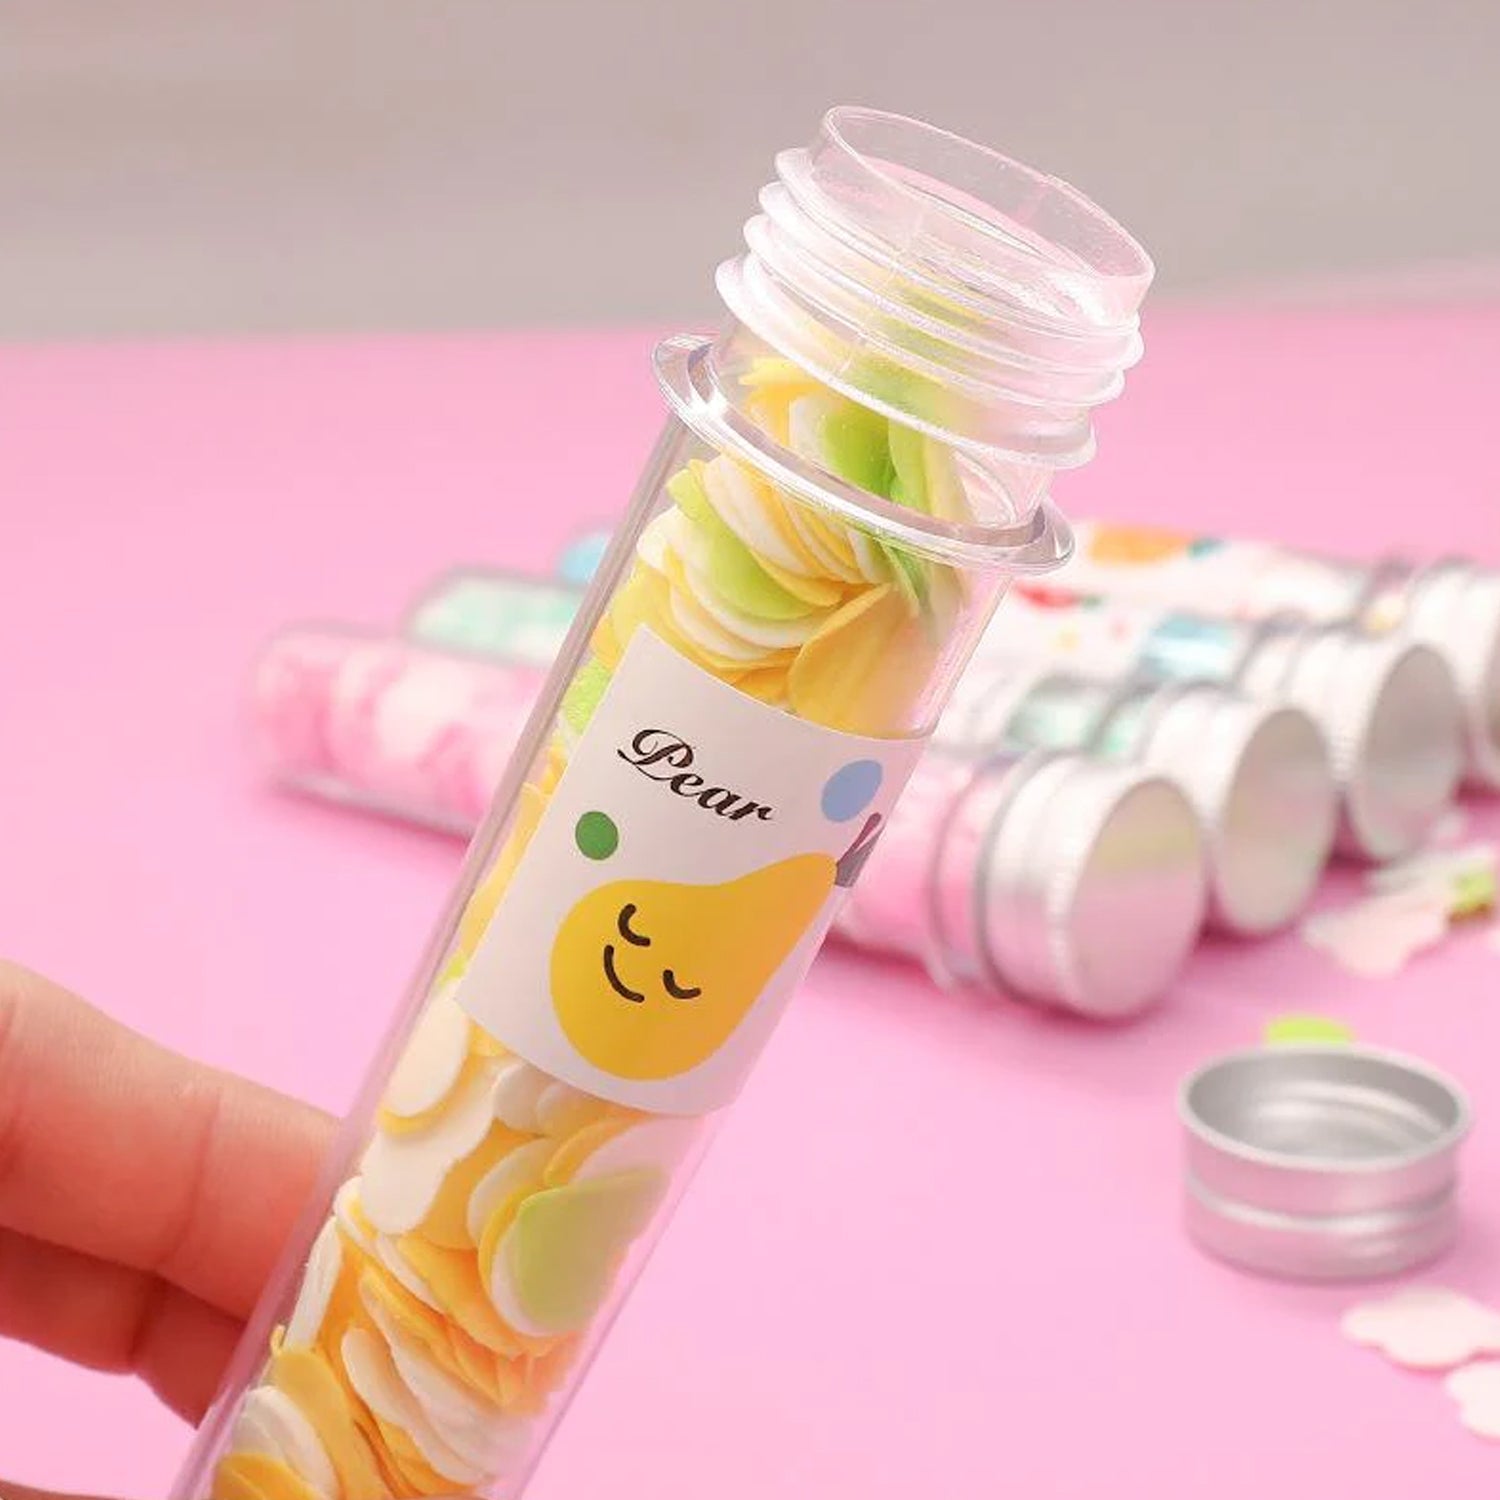 6289 Portable Hand Washing Bath Flower Shape Paper Soap Strips In Test Tube Bottle 